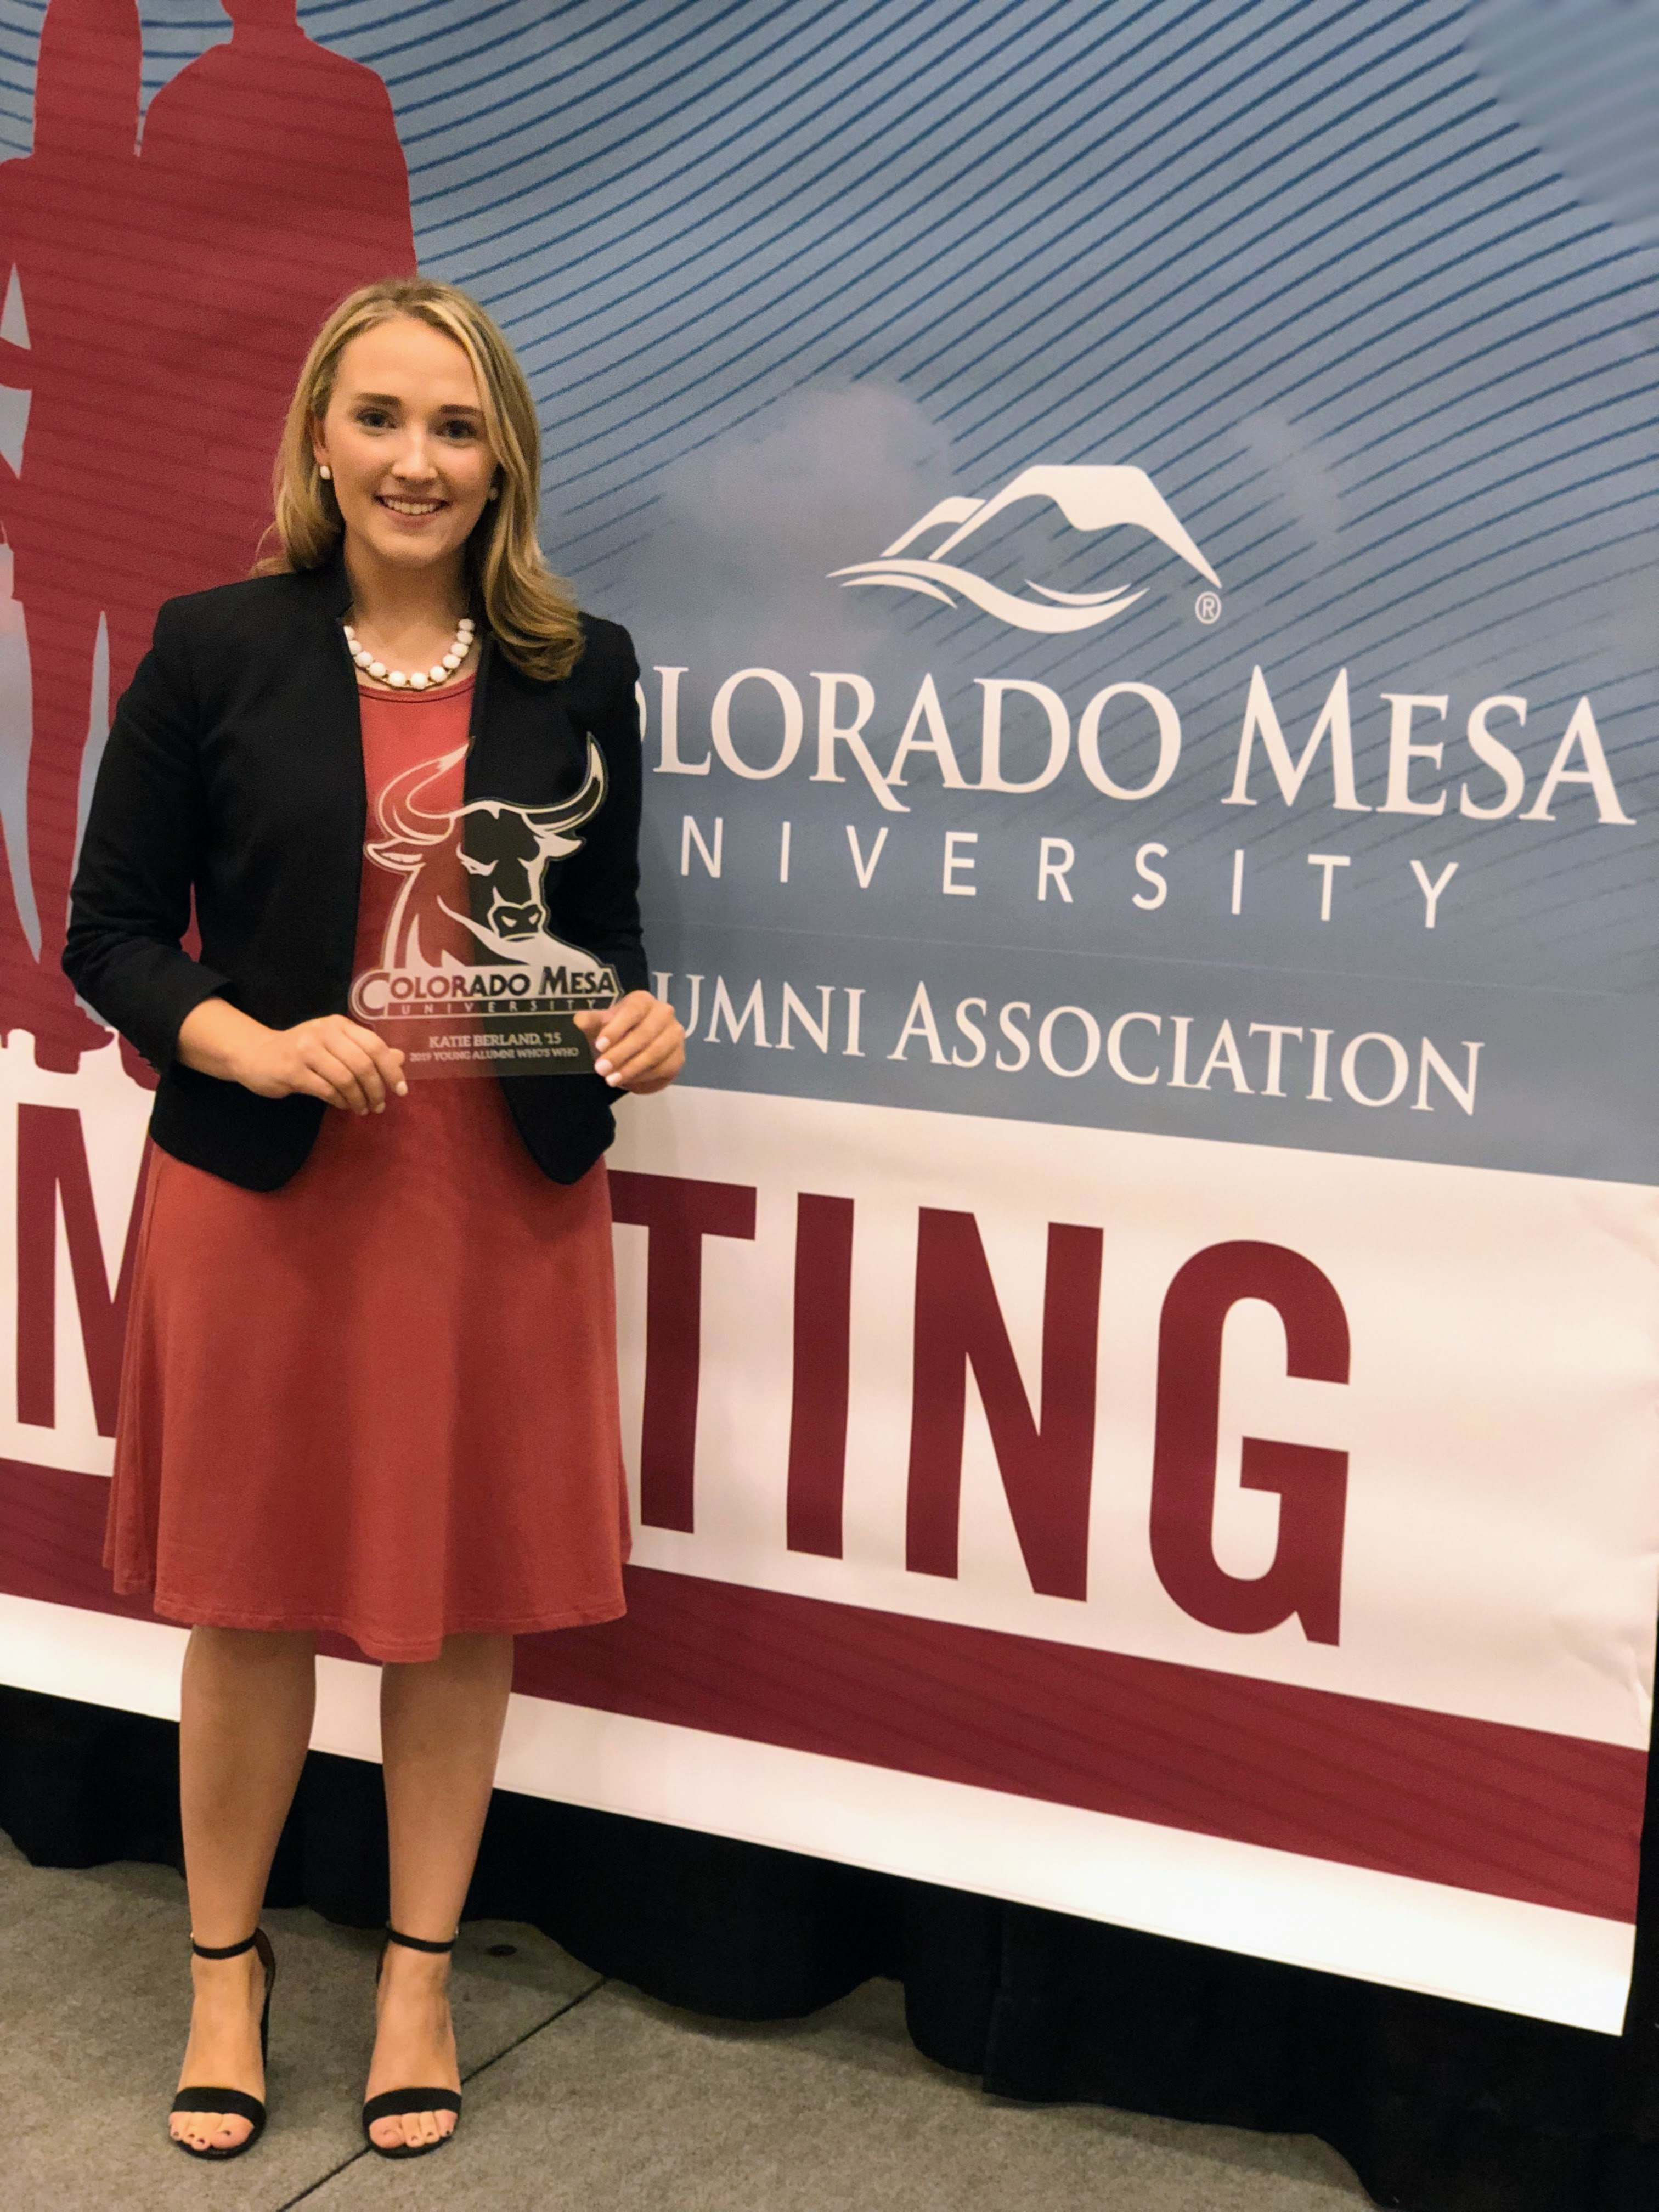 Katie won the CMU Alumni Association Who's Who Award in 2019